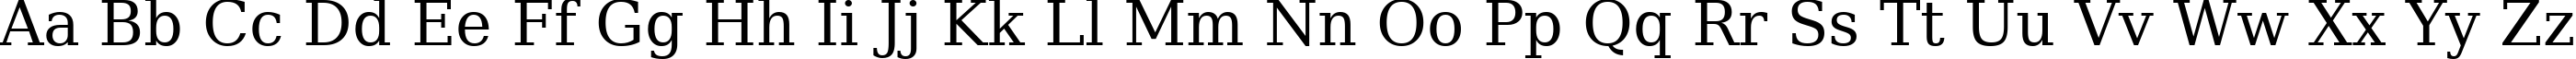 Пример написания английского алфавита шрифтом ae_Haramain